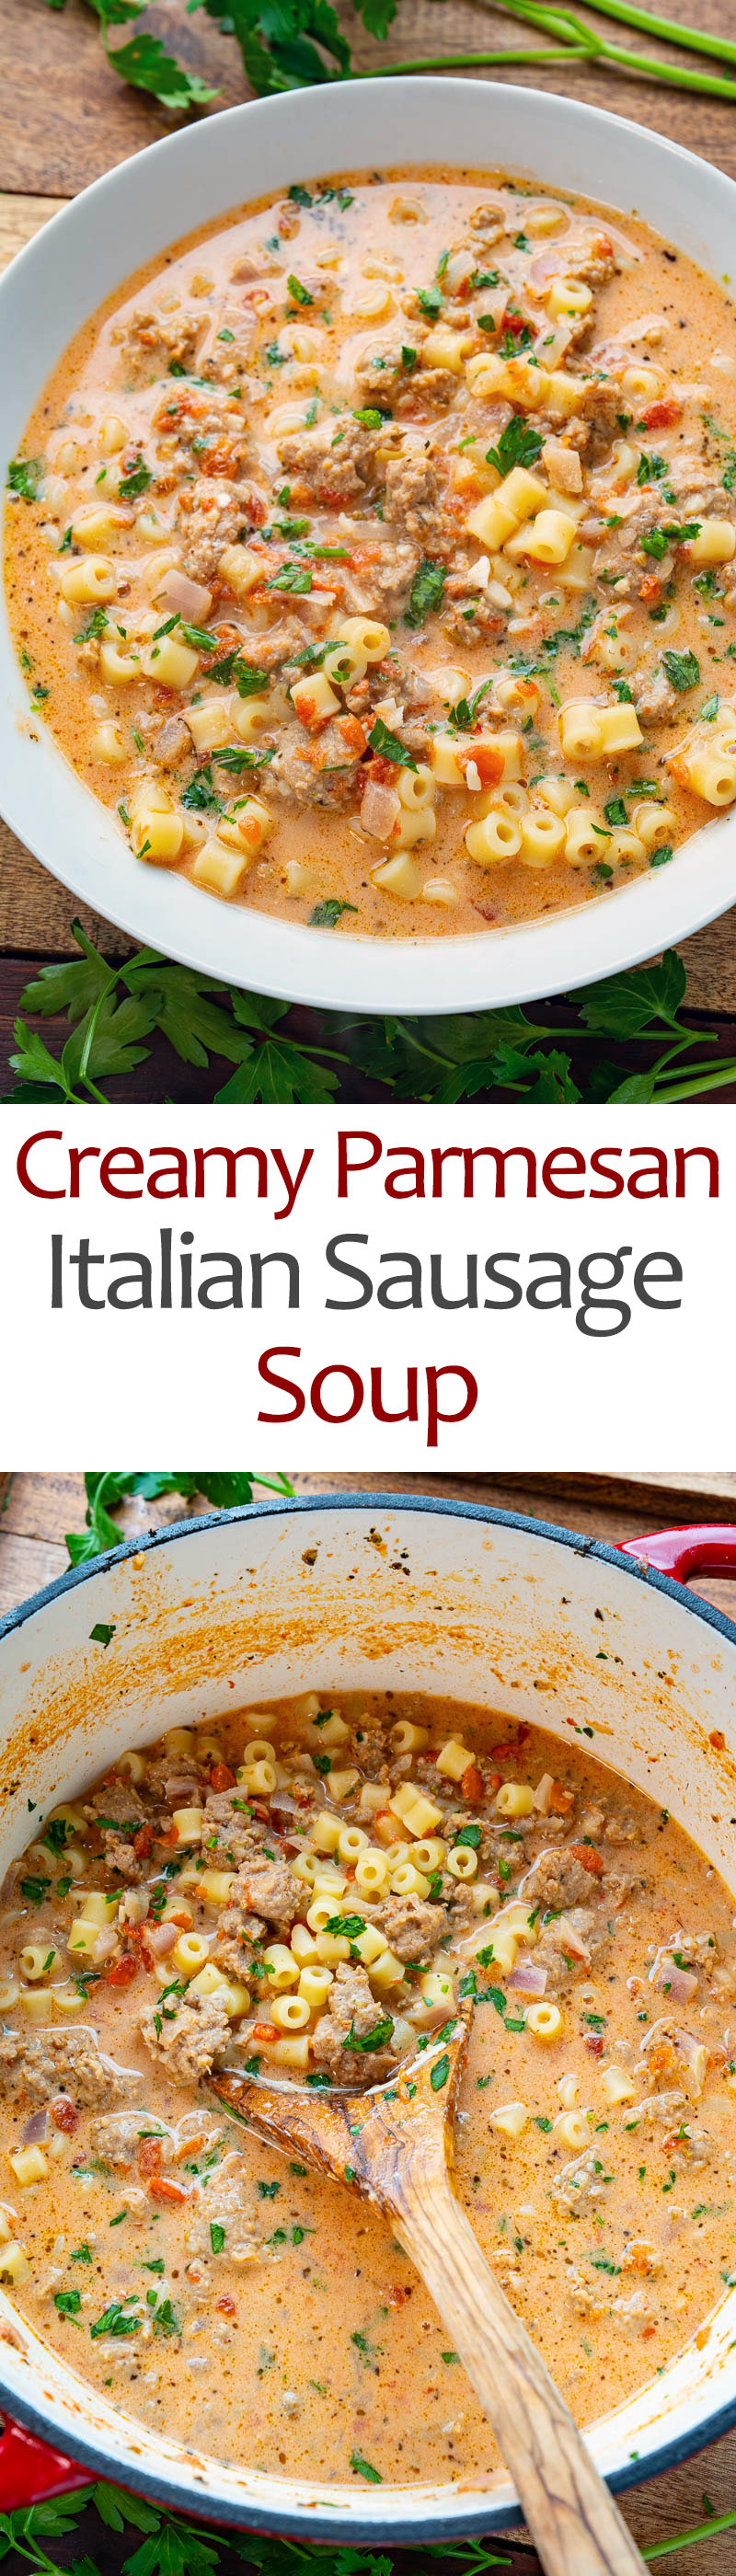 Creamy Parmesan Italian Sausage Soup